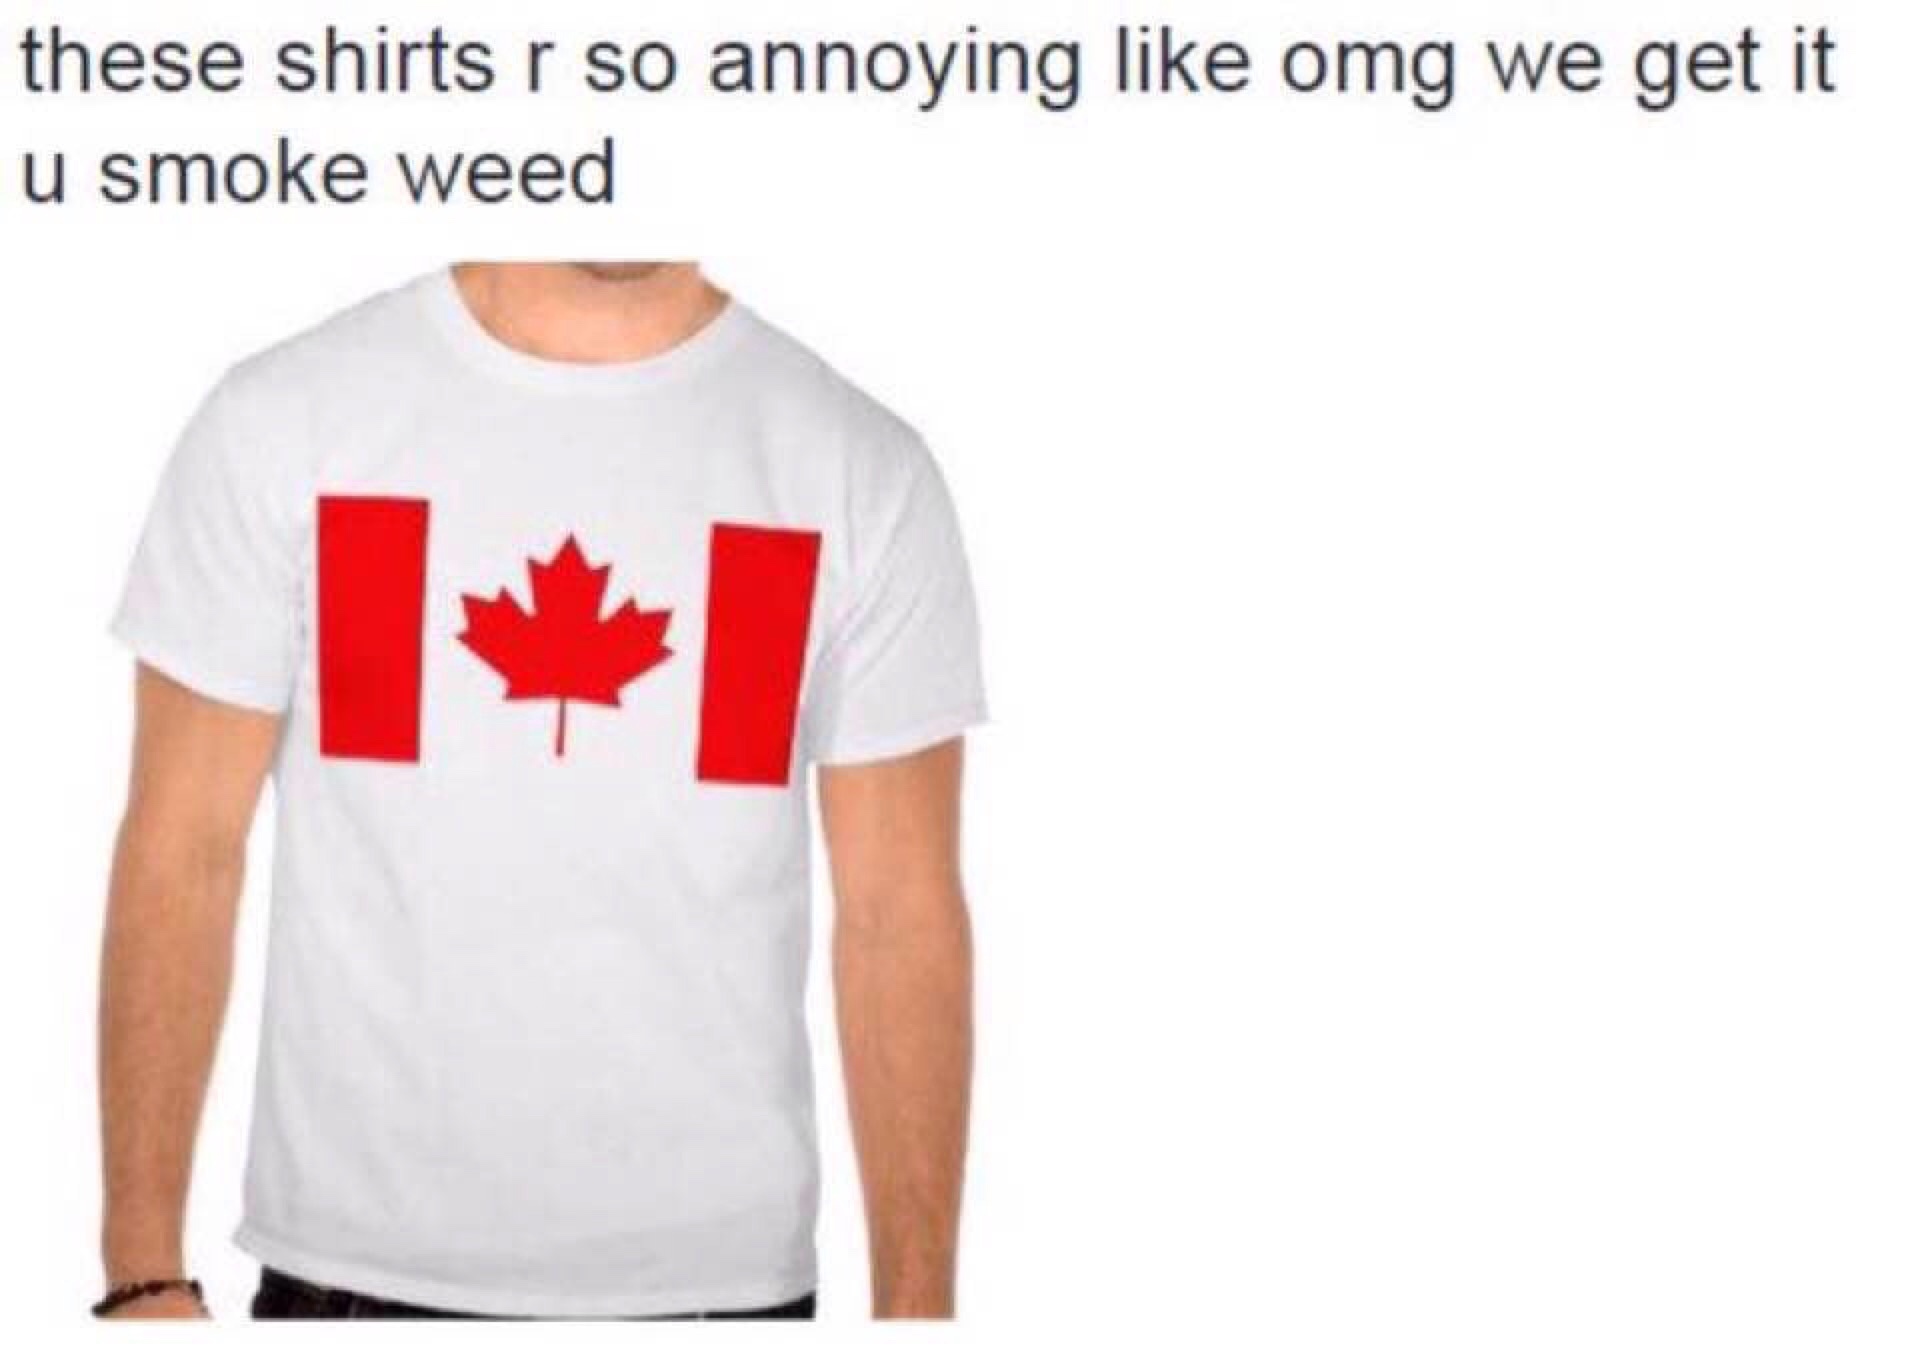 rip all canadians - meme